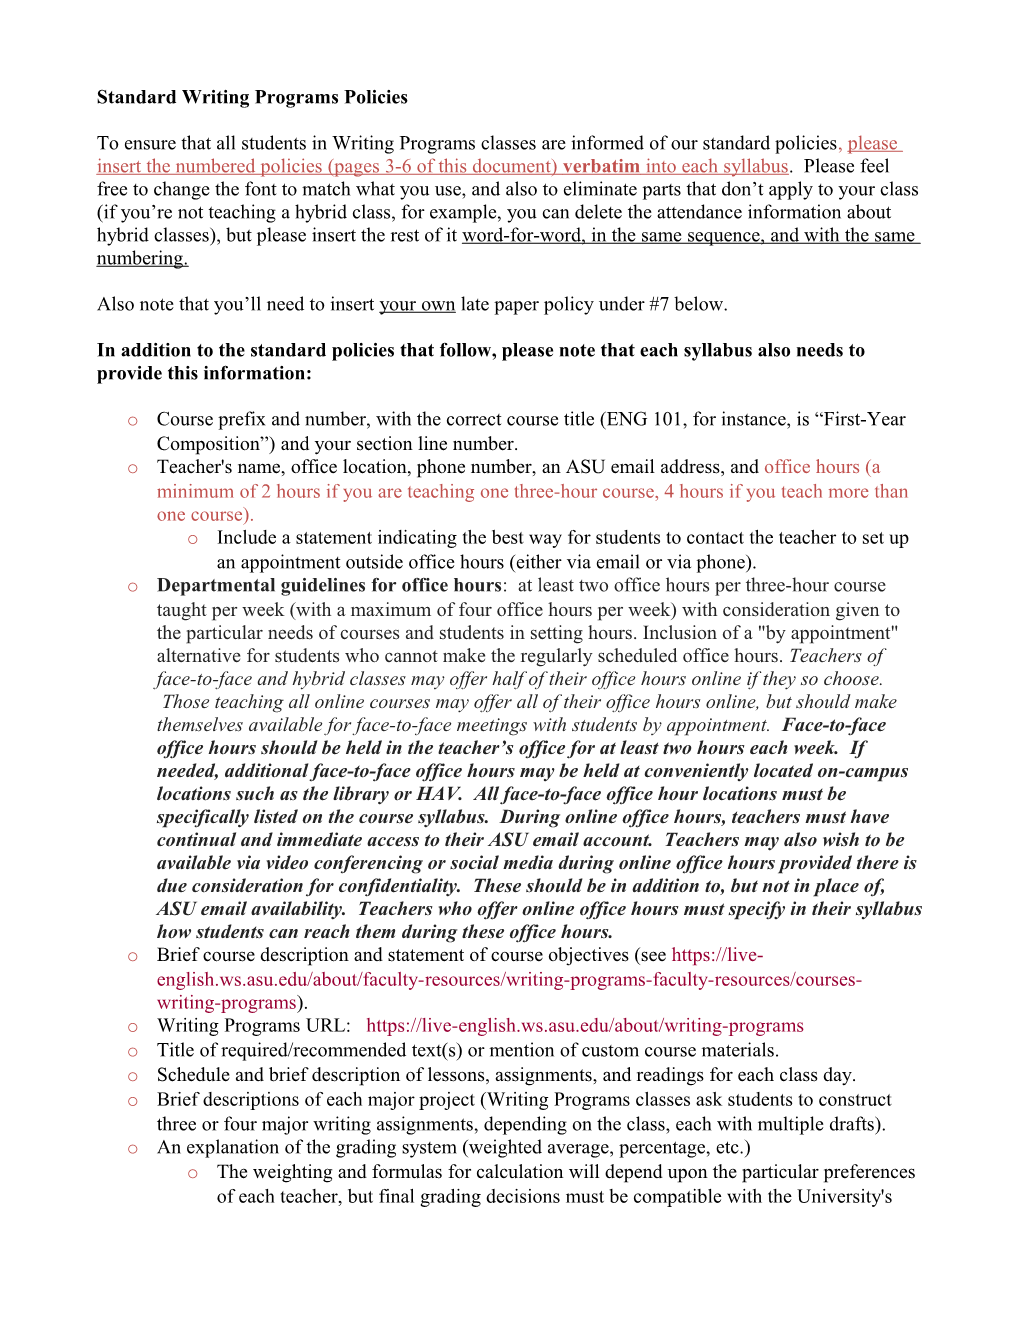 Standard Writing Programs Policies (Revised 7/2010)